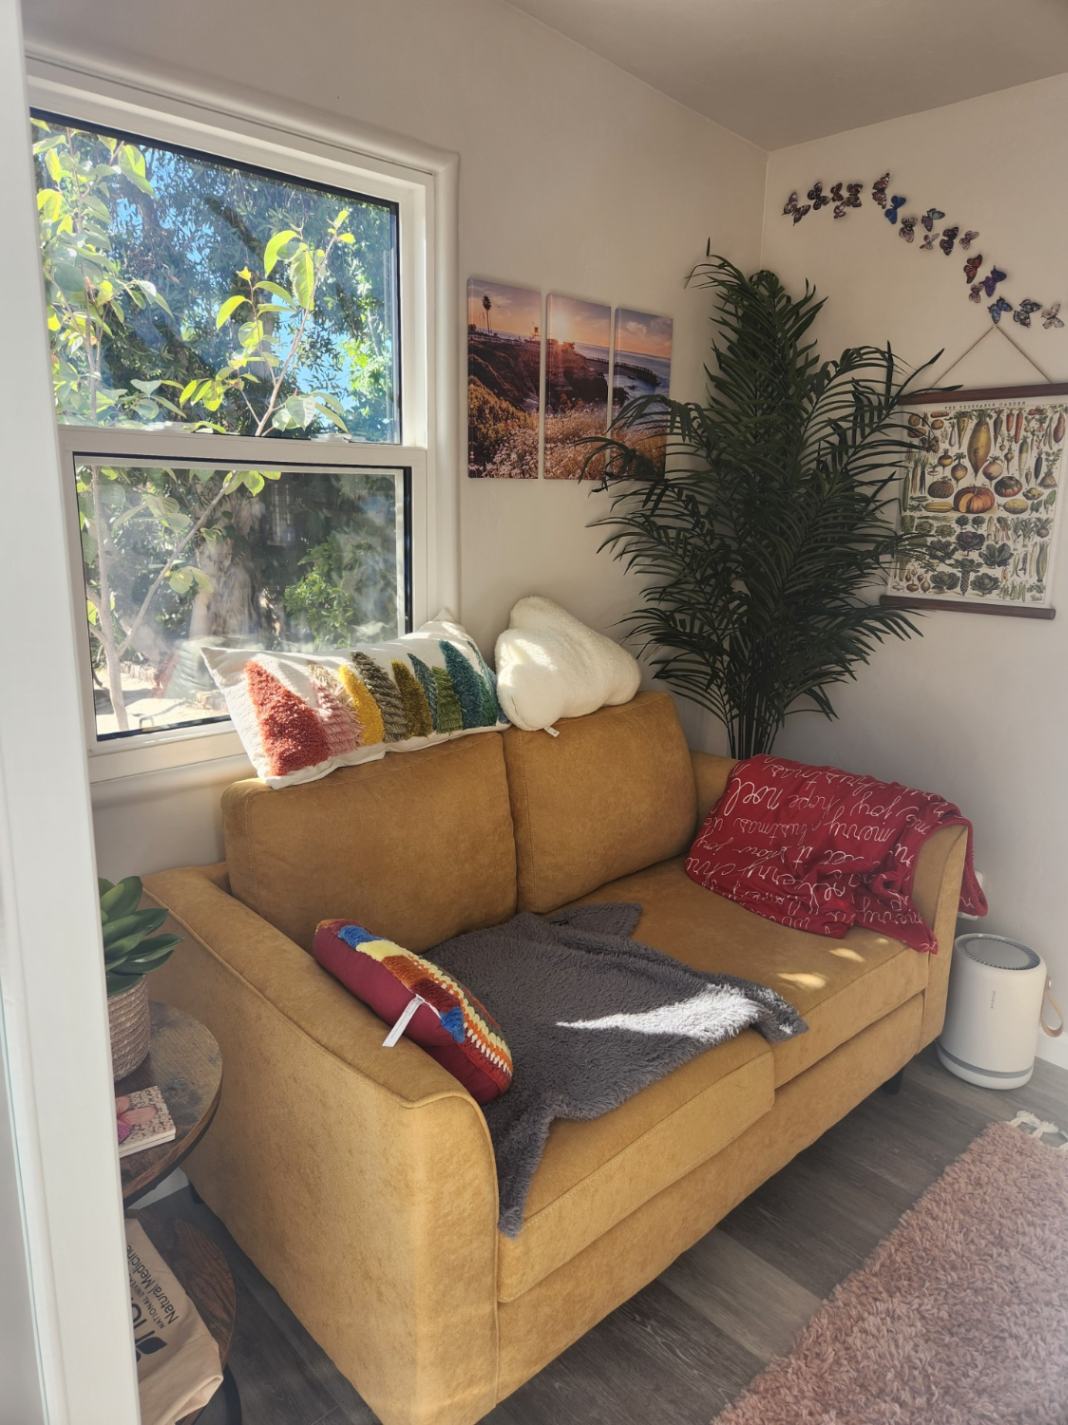 Interior view of 8’x12' Urban Studio Home Studio located in San Diego, California - Summerwood Pro